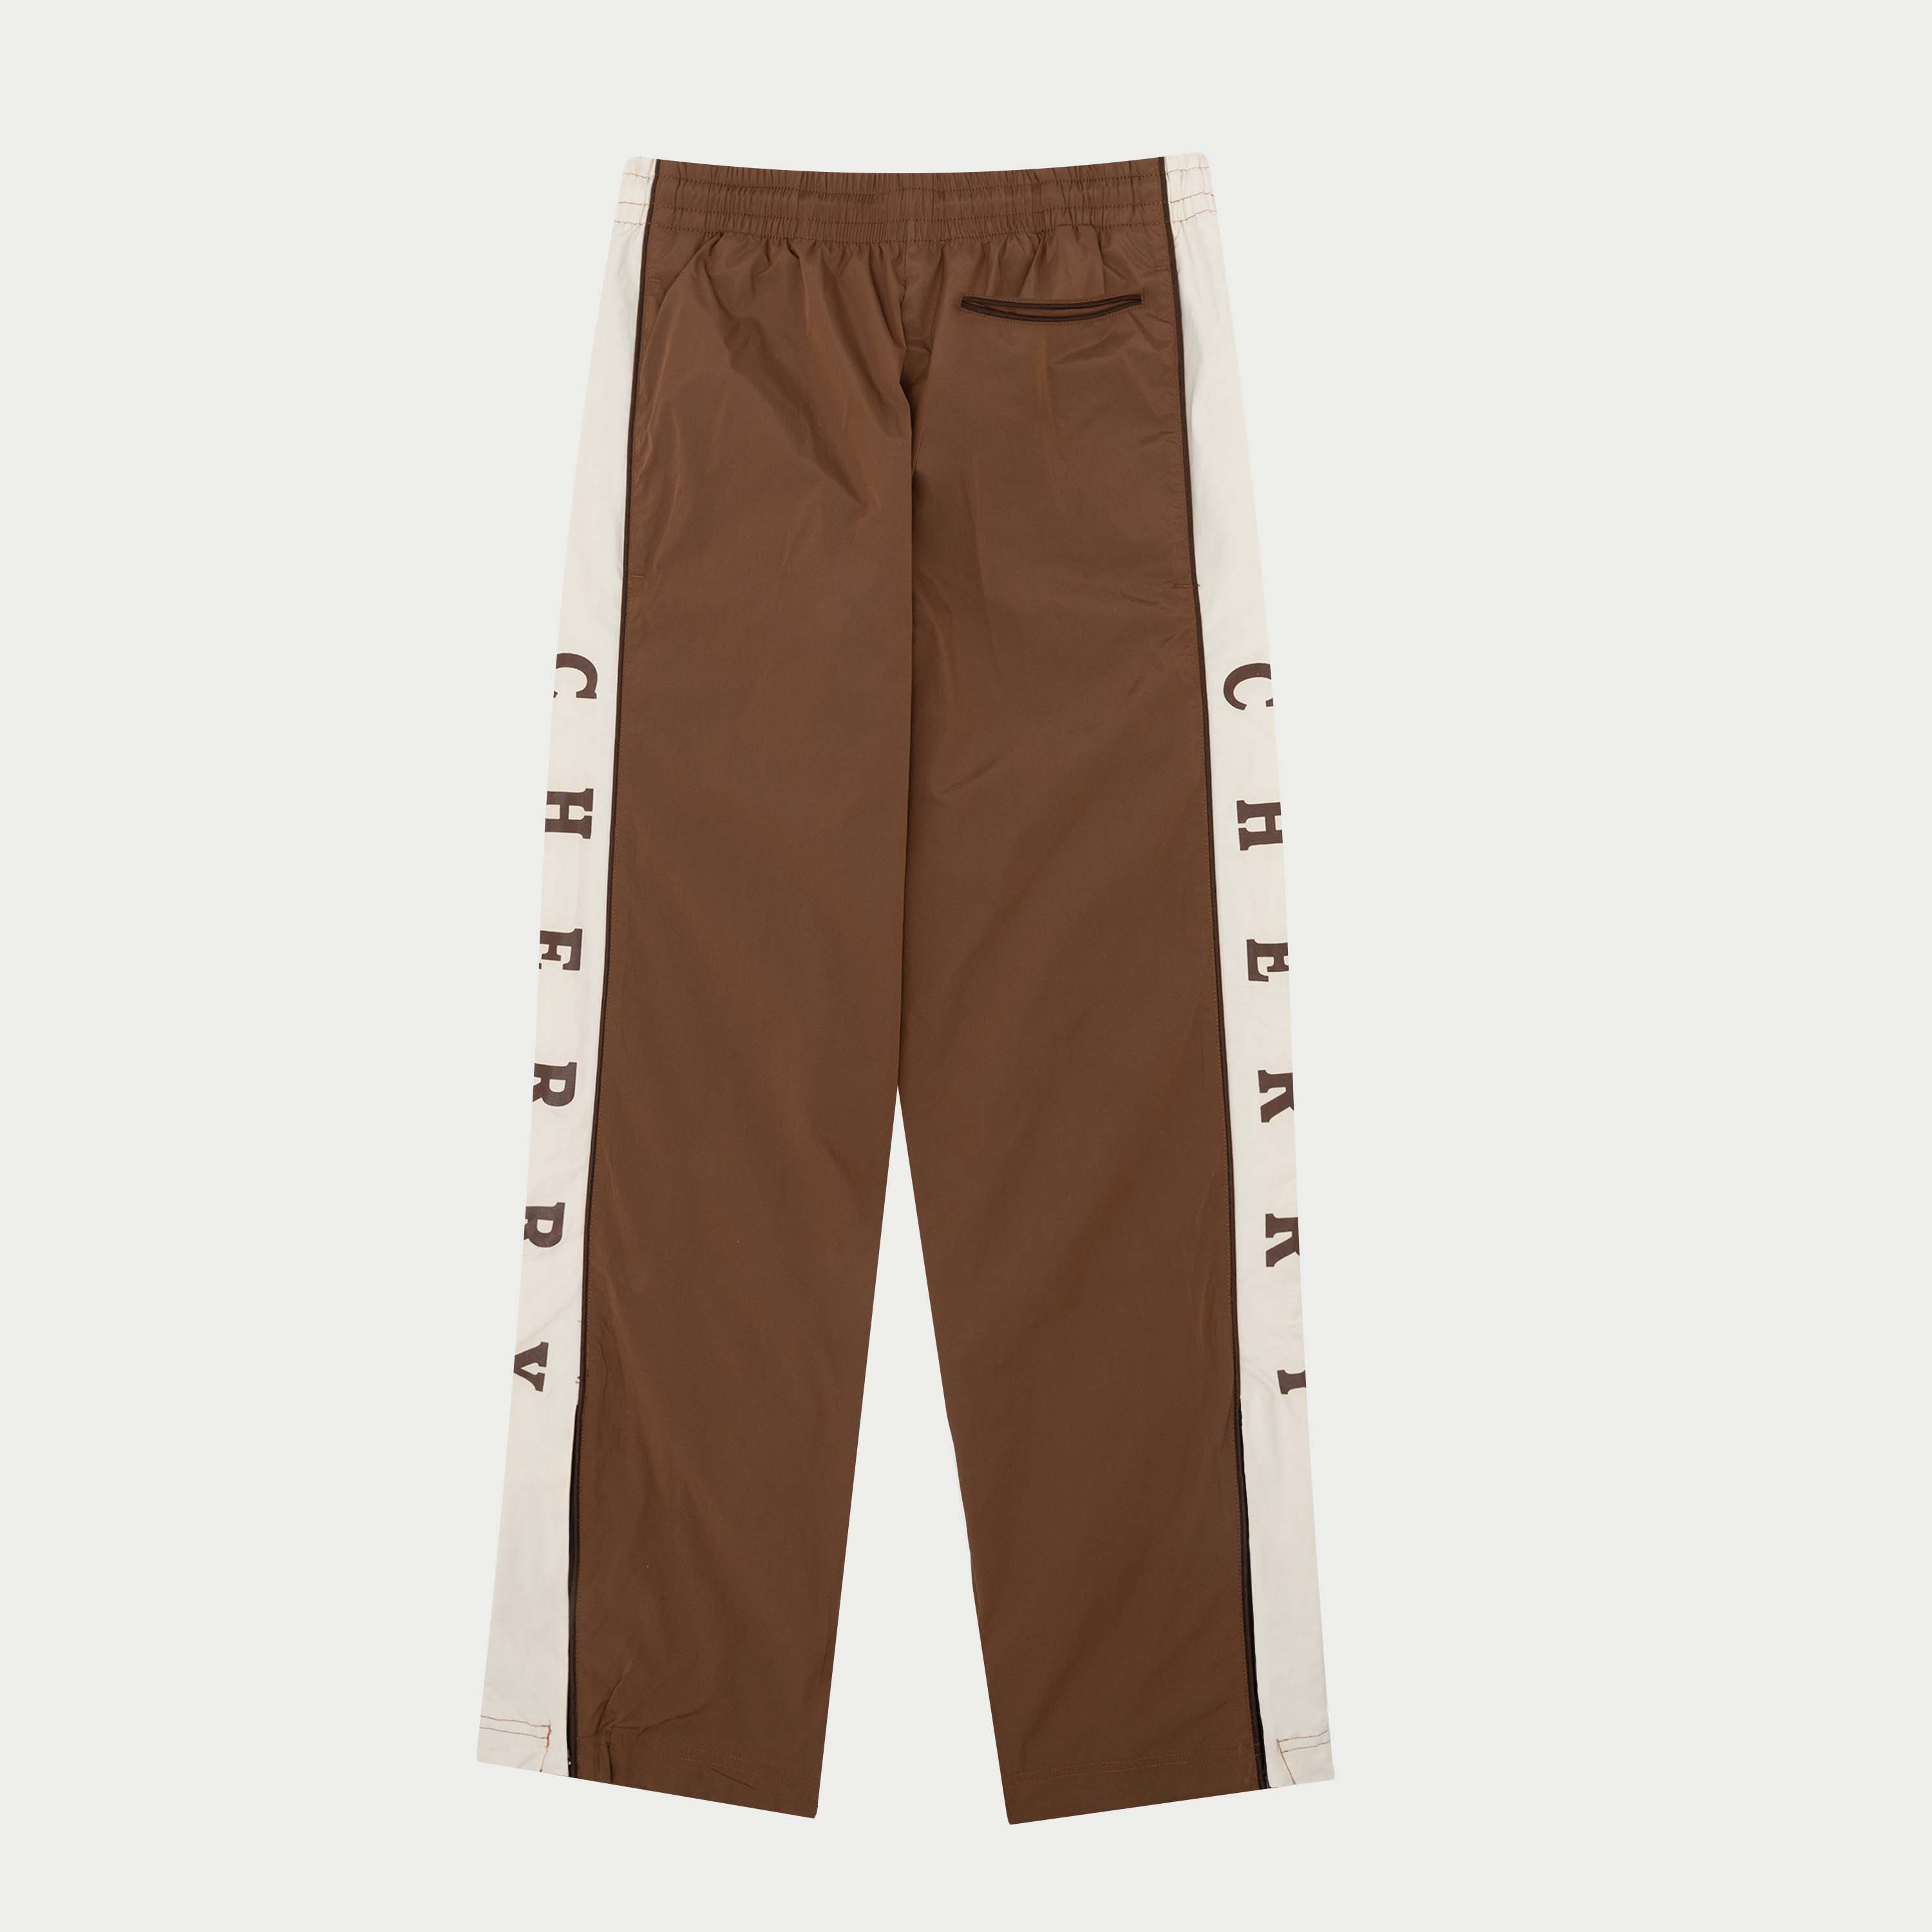 Pit Crew Track Pants (Brown)